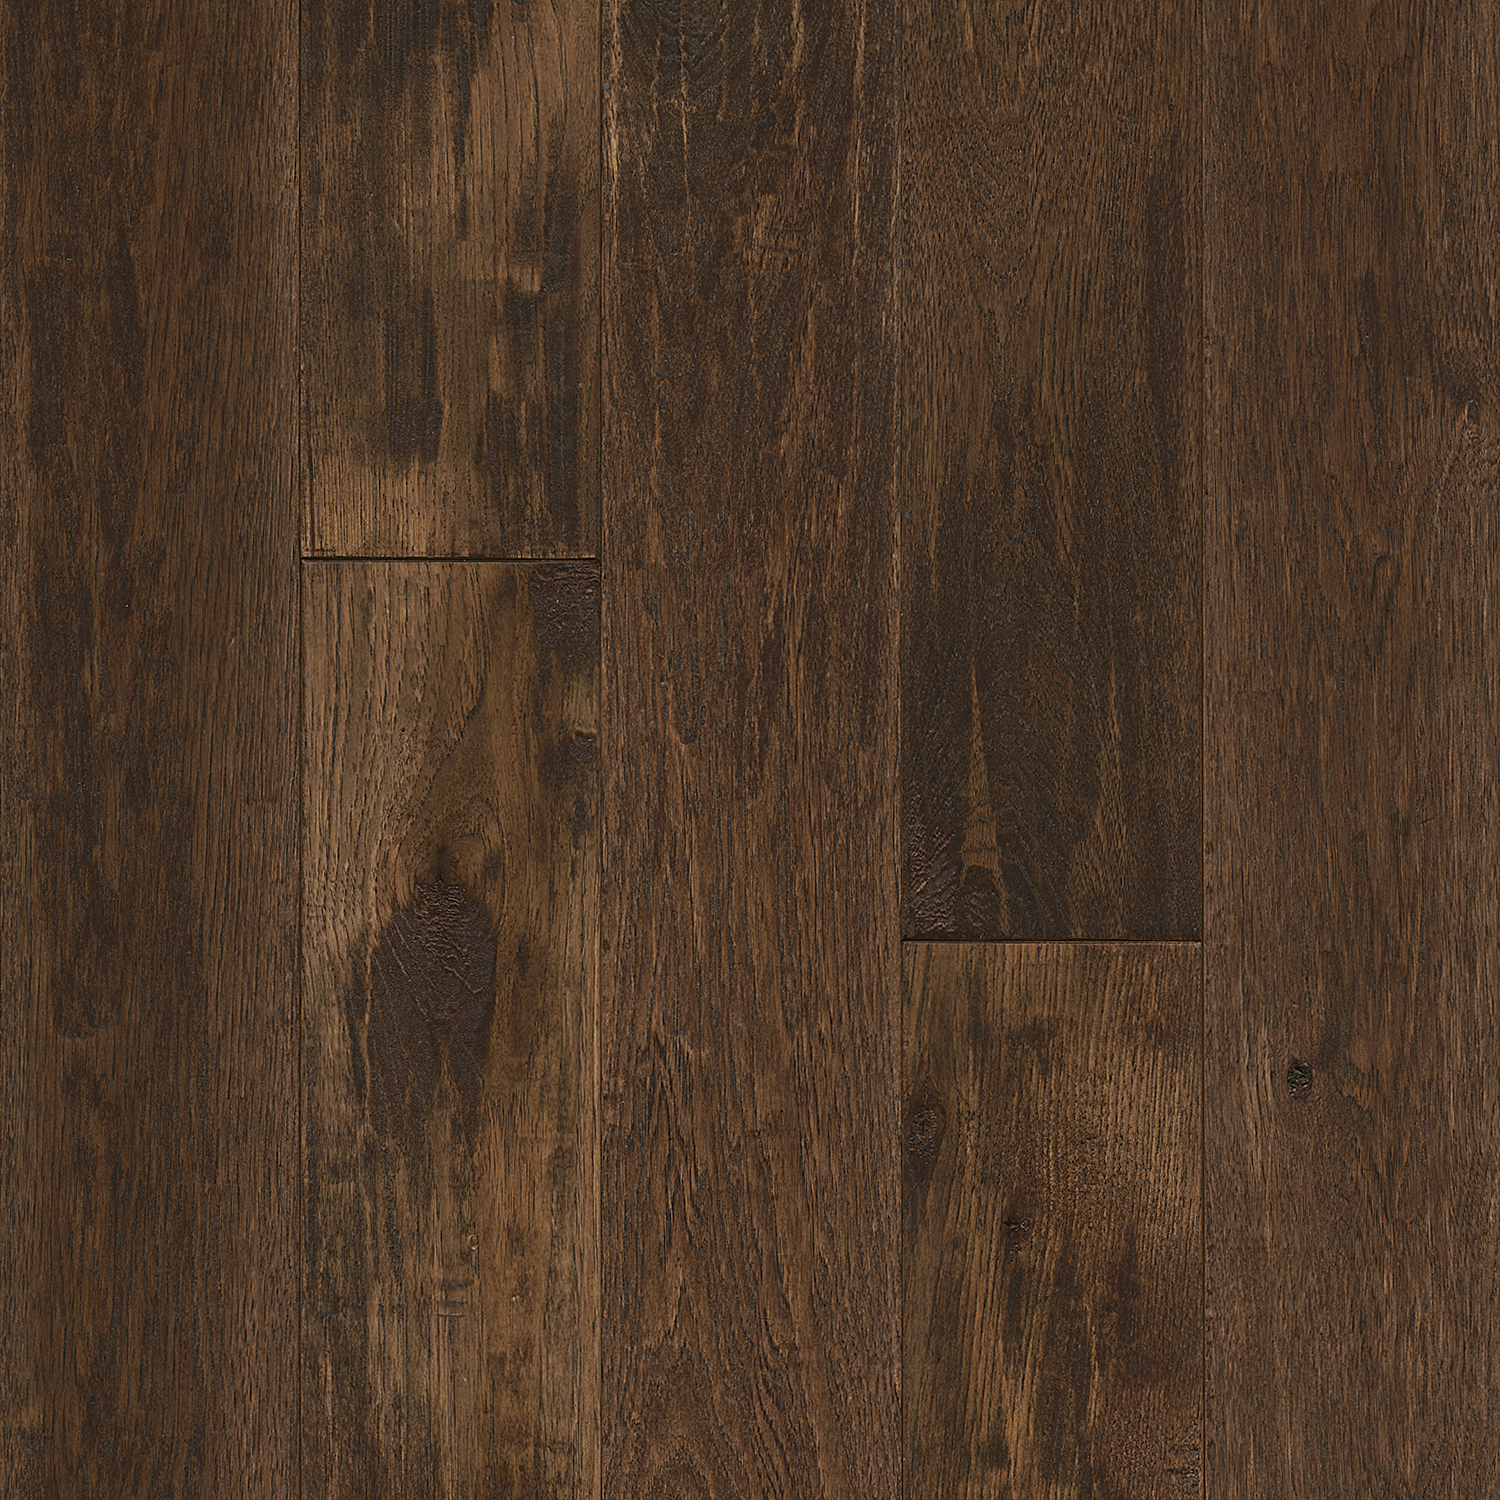 Hickory Solid Hardwood Sas508, R & S Hardwood Flooring